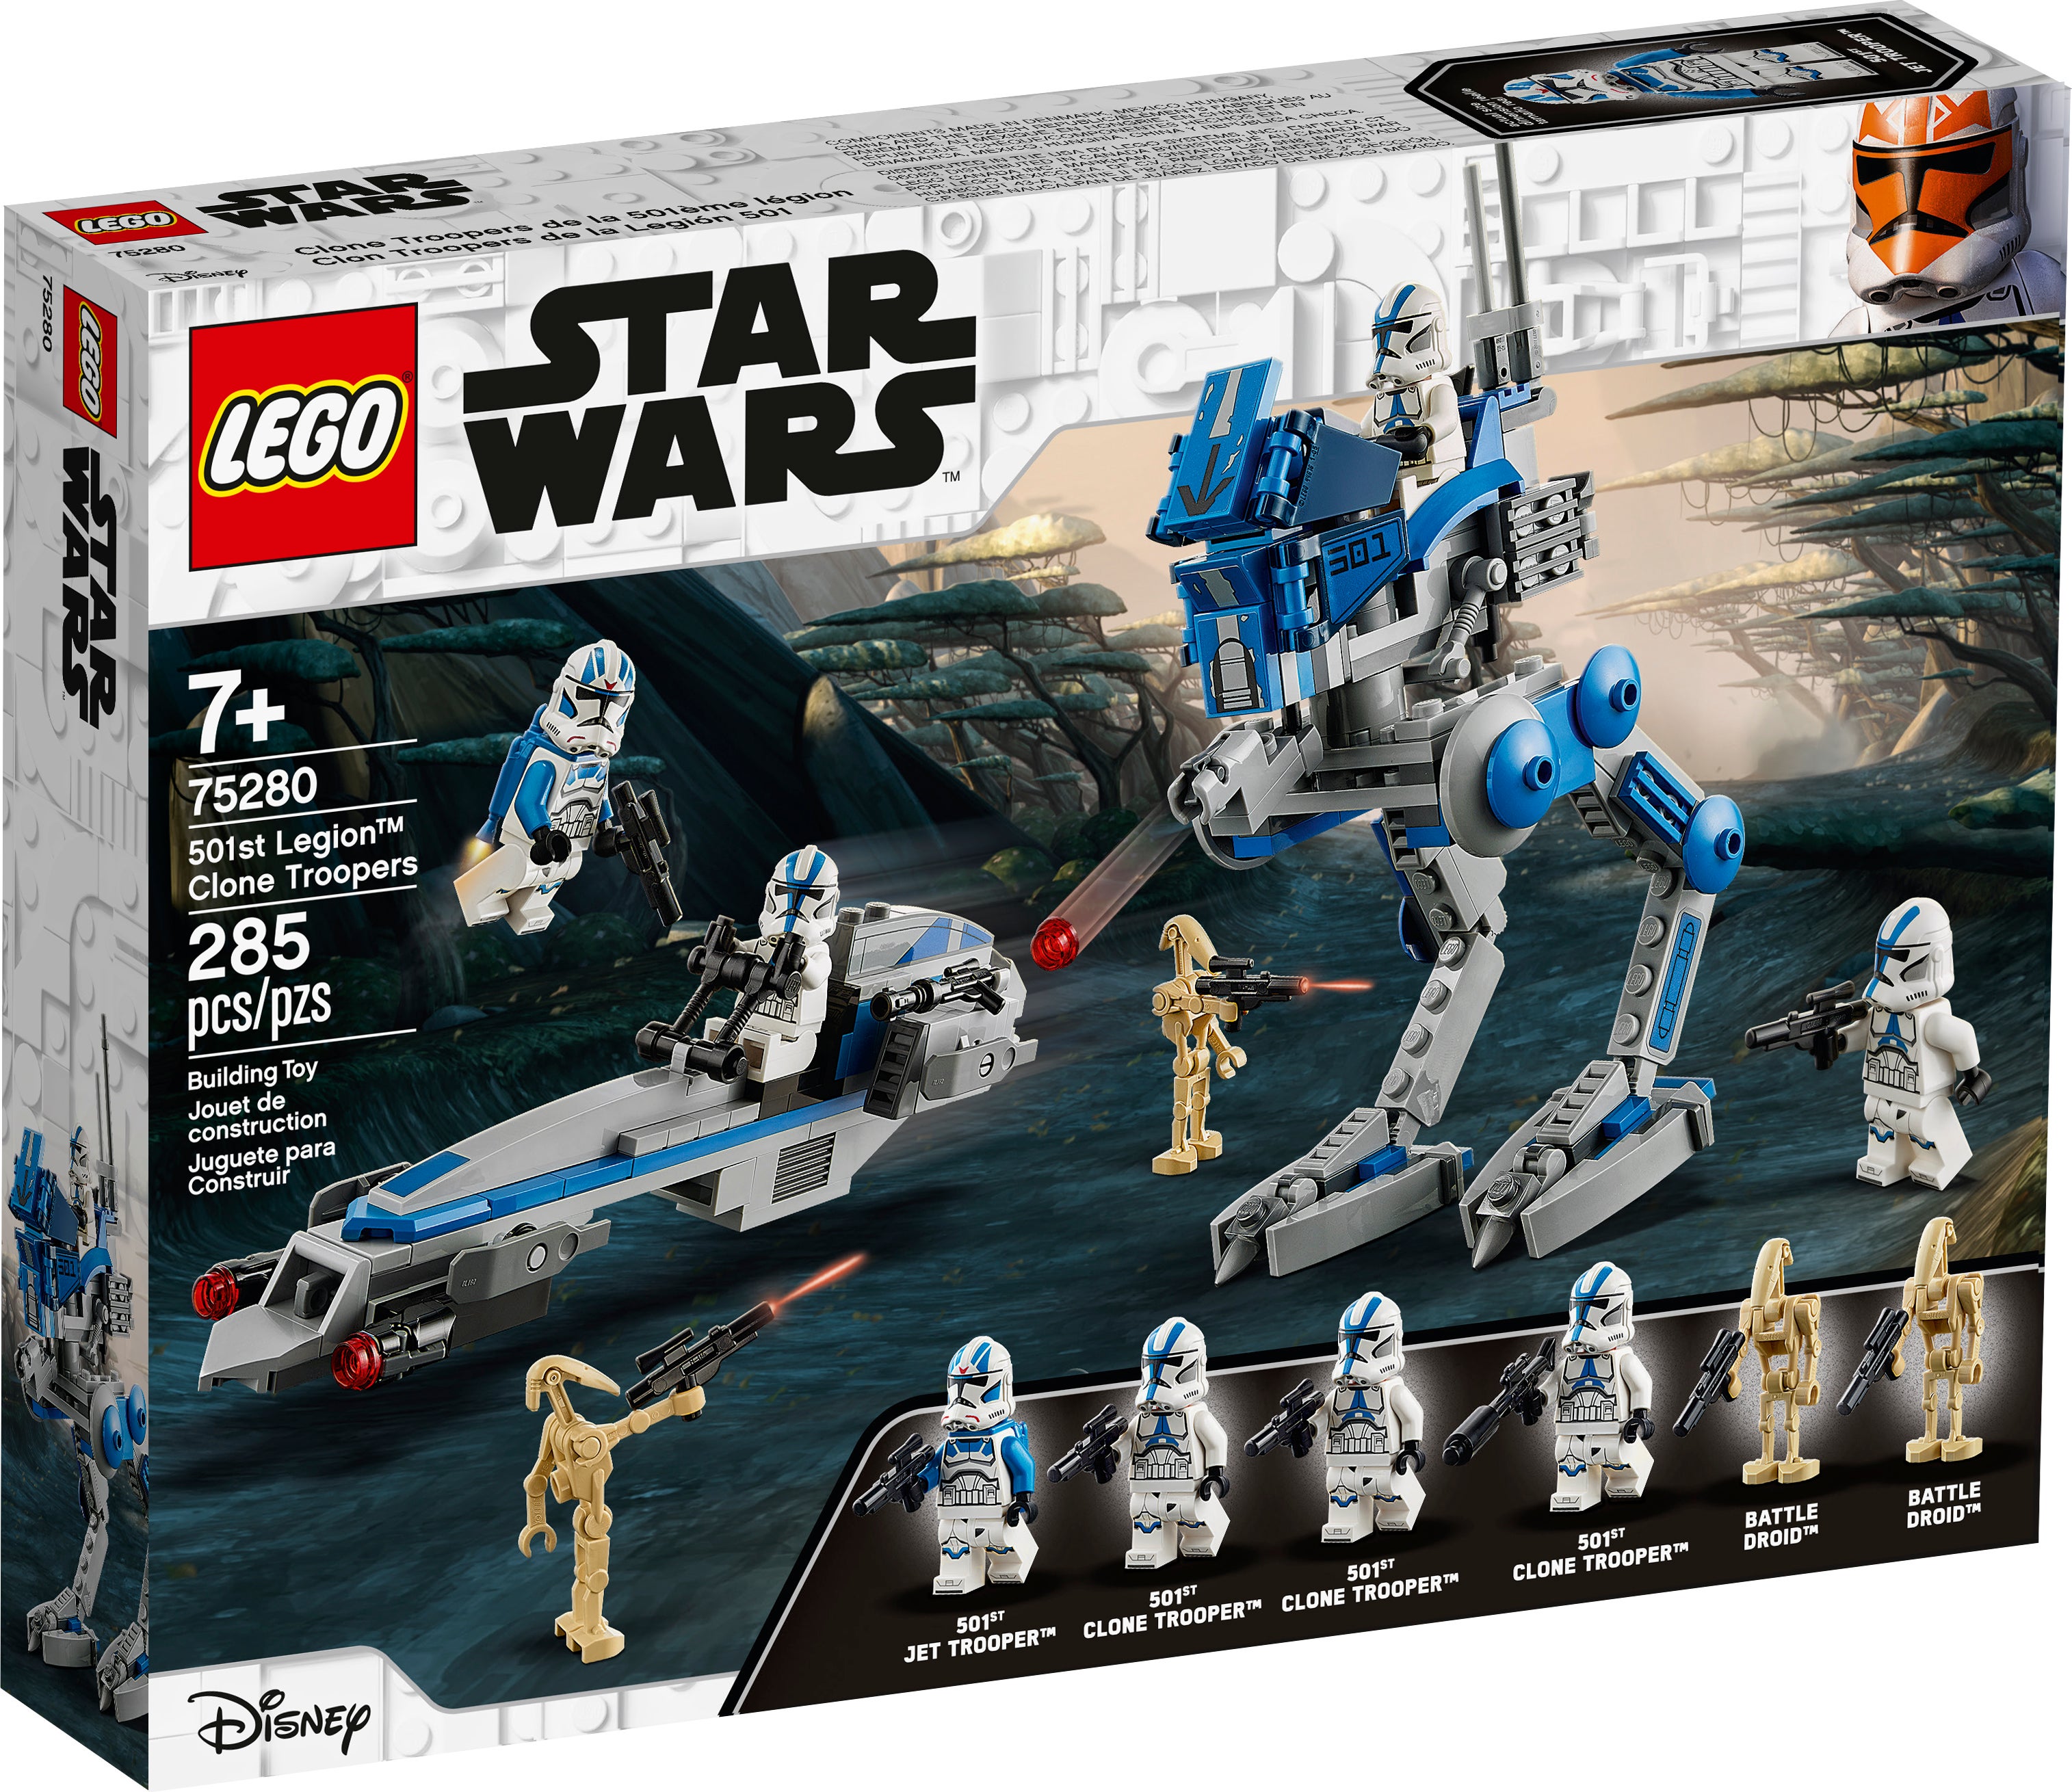 NEUF LEGO Star Wars sw75280 501st Clone Trooper 